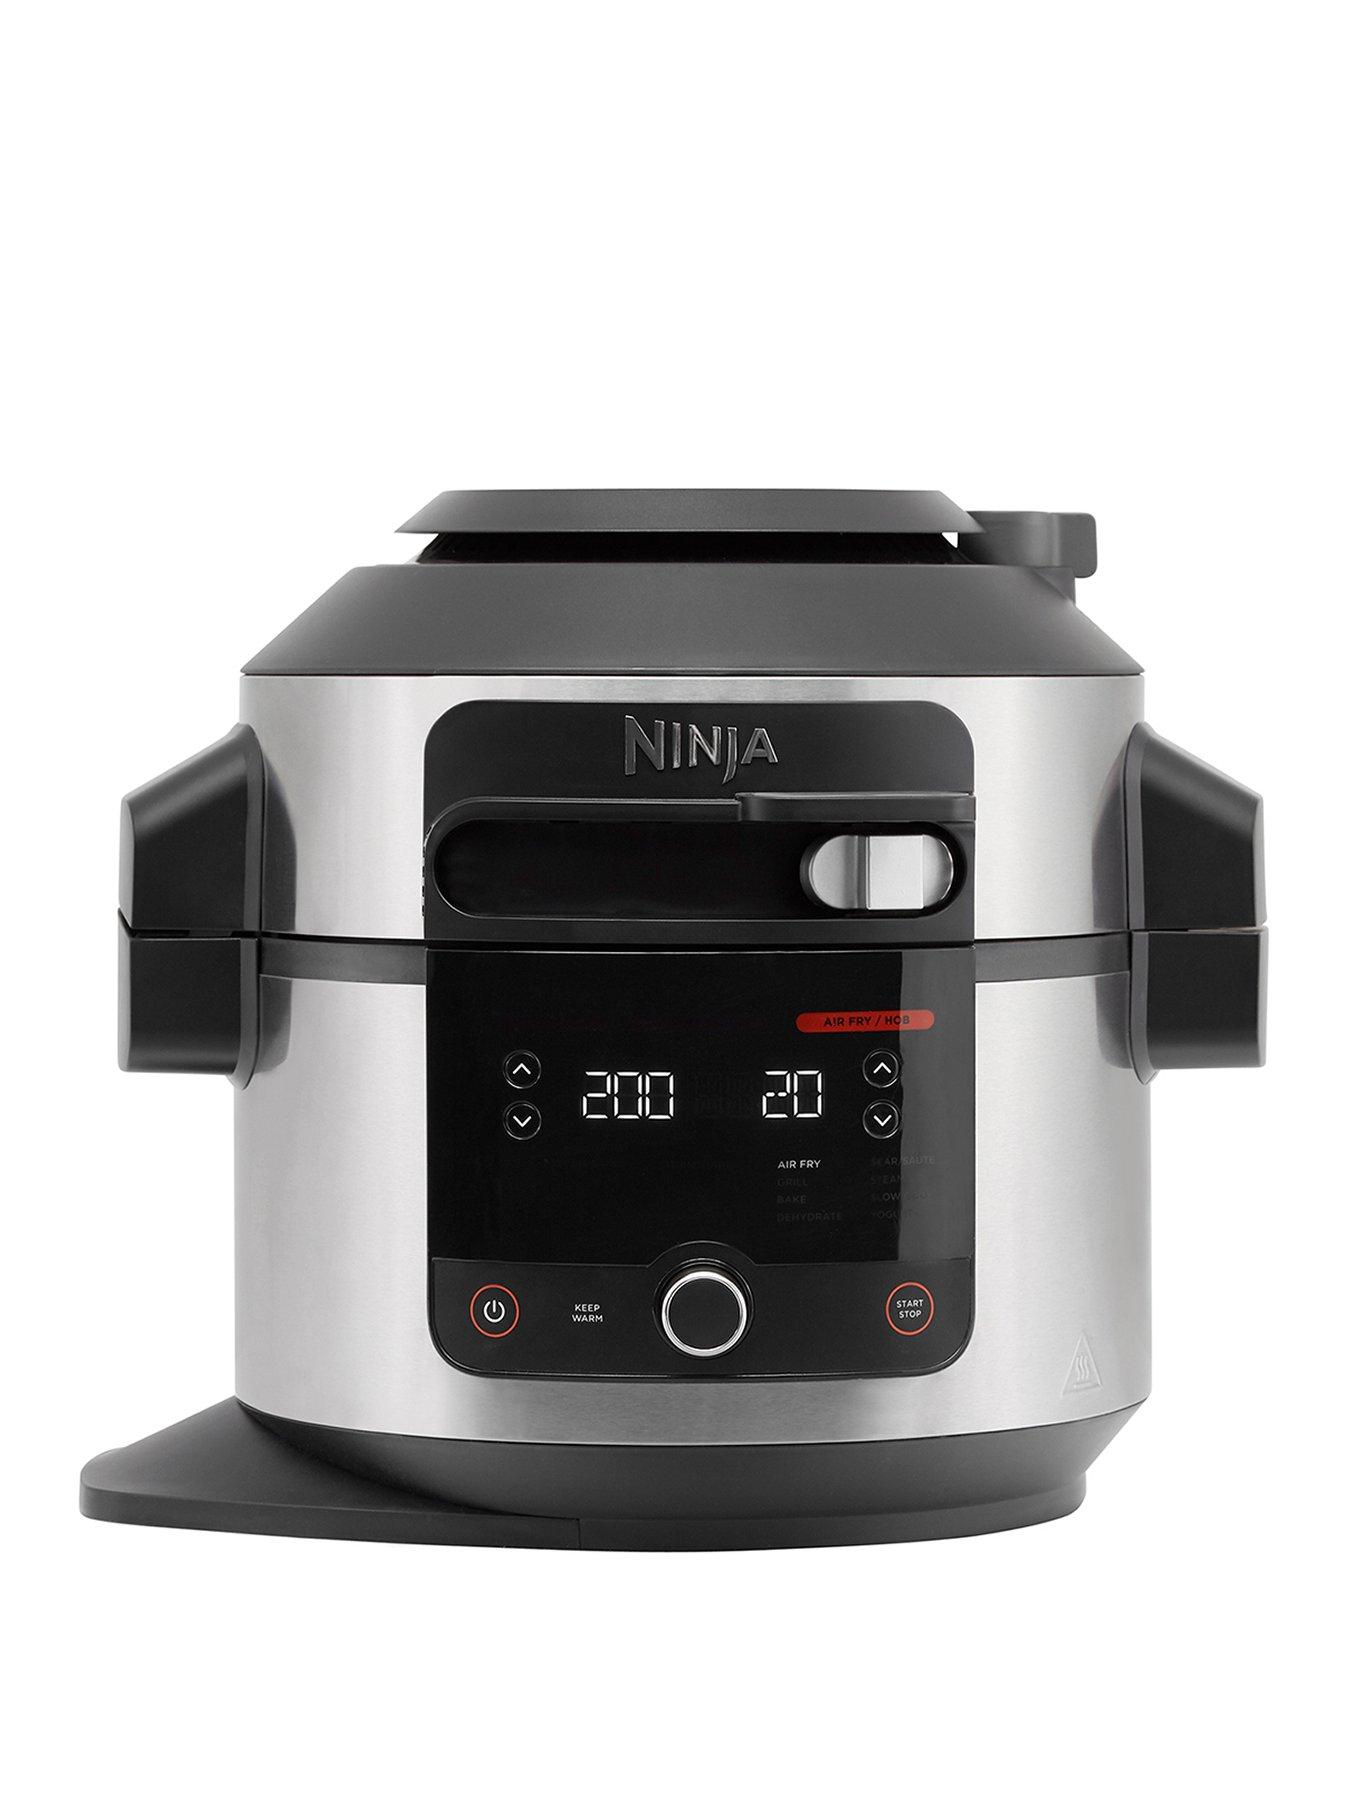 Ninja's 12-in-1 XL Multi-Cooker now $150 (Reg. $200)